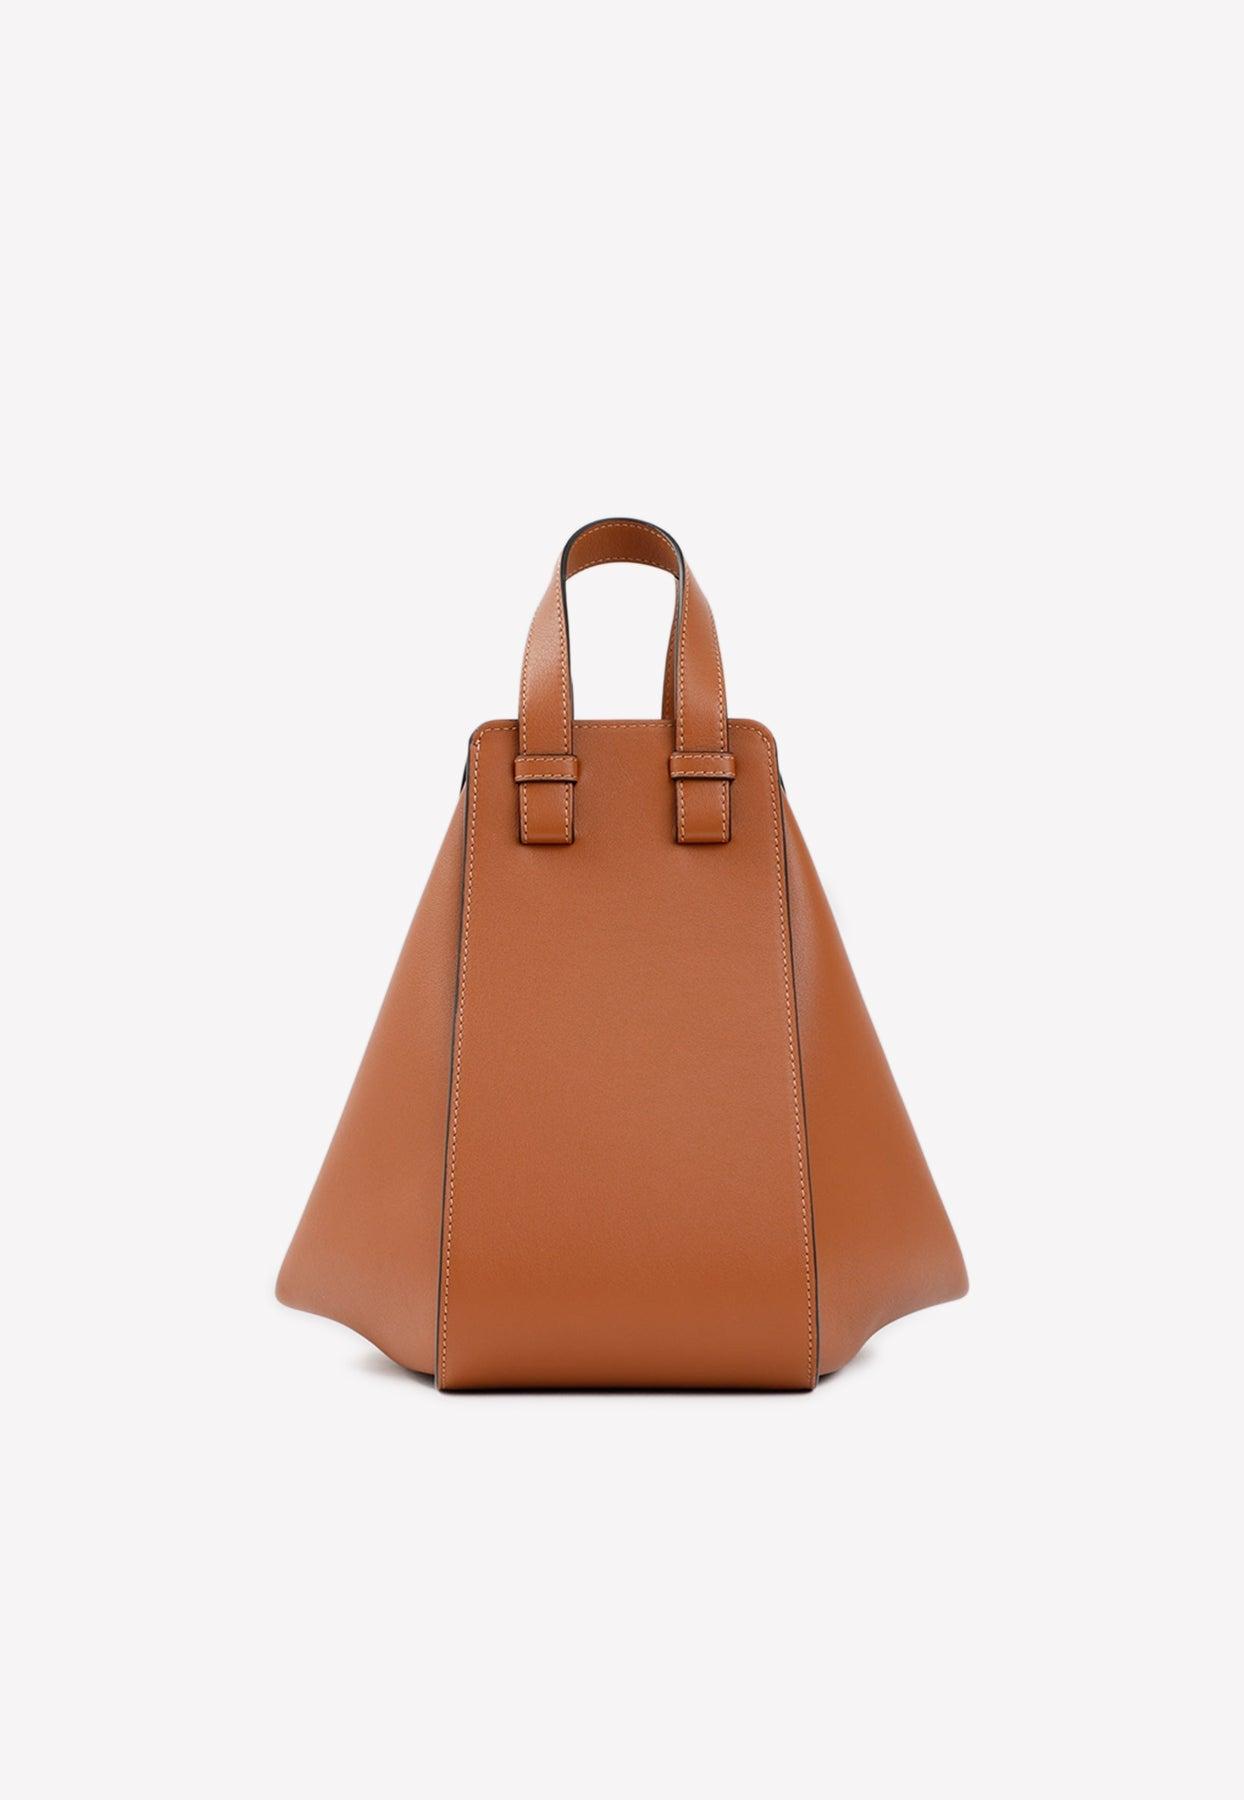 LOEWE - Hammock small leather shoulder bag